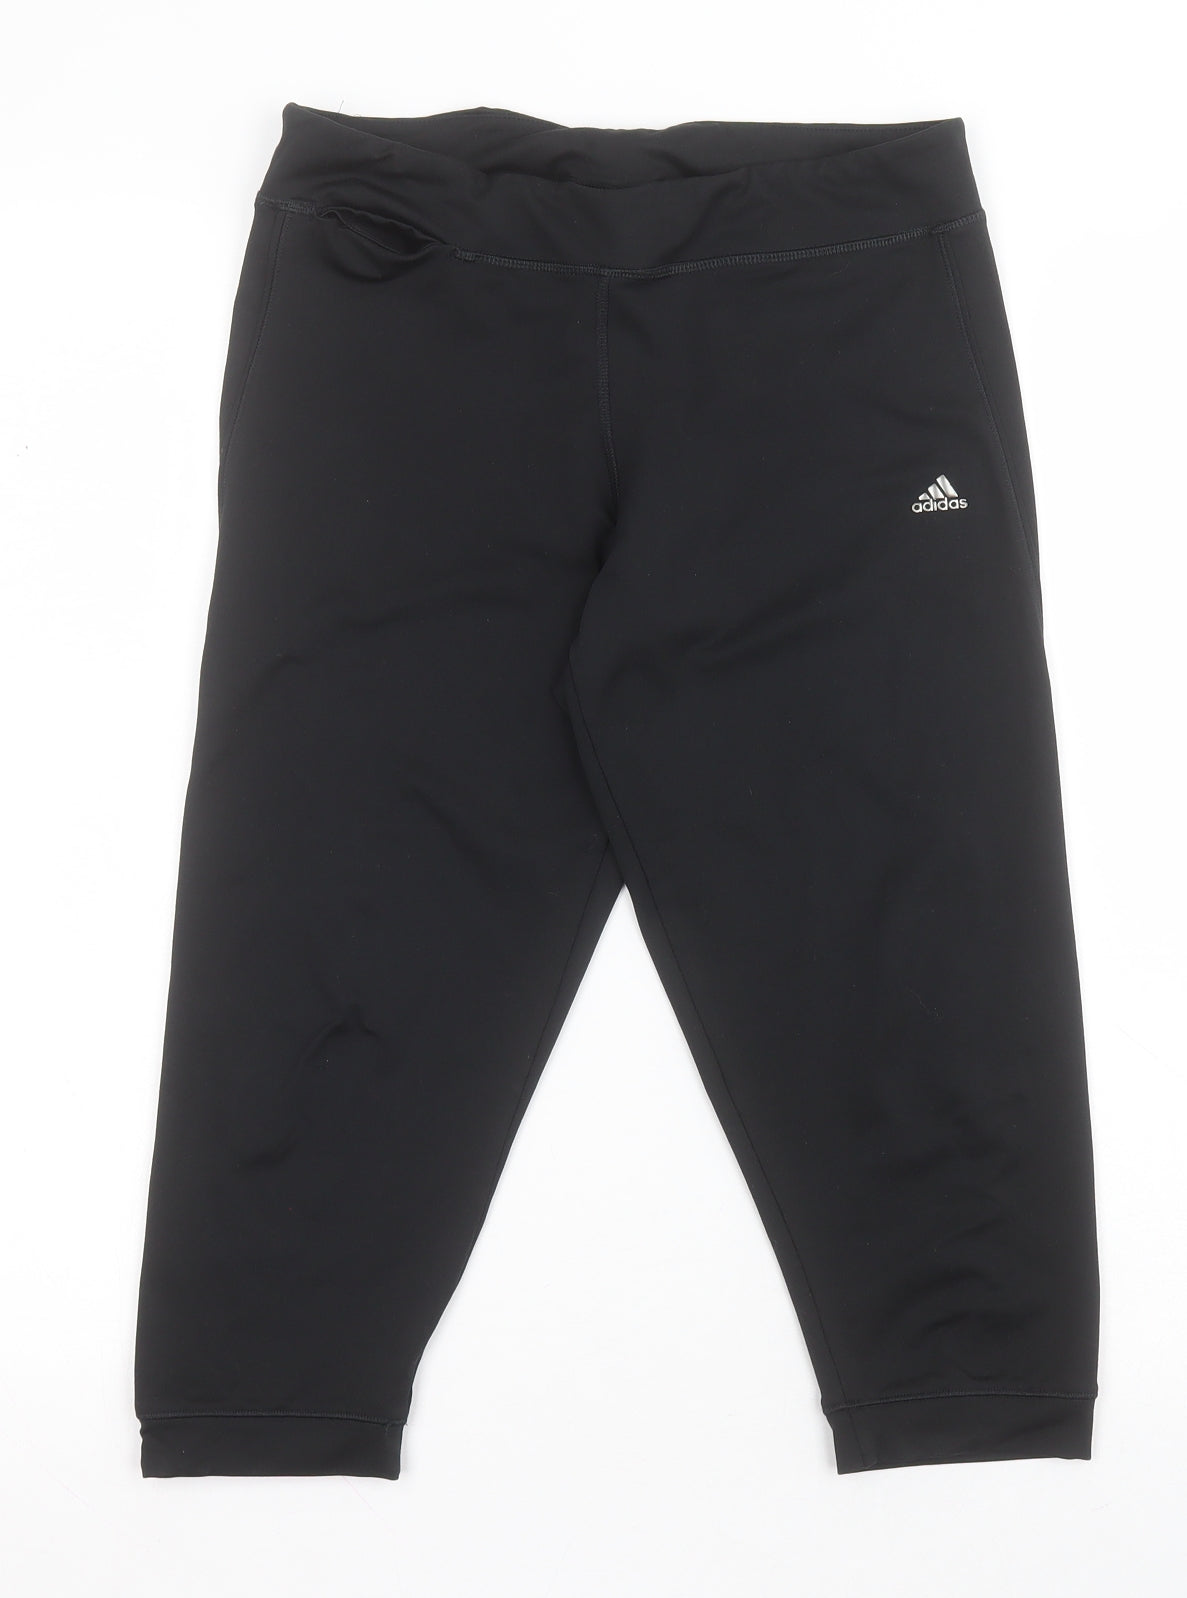 adidas Womens Black Polyester Capri Leggings Size M L25 in Regular